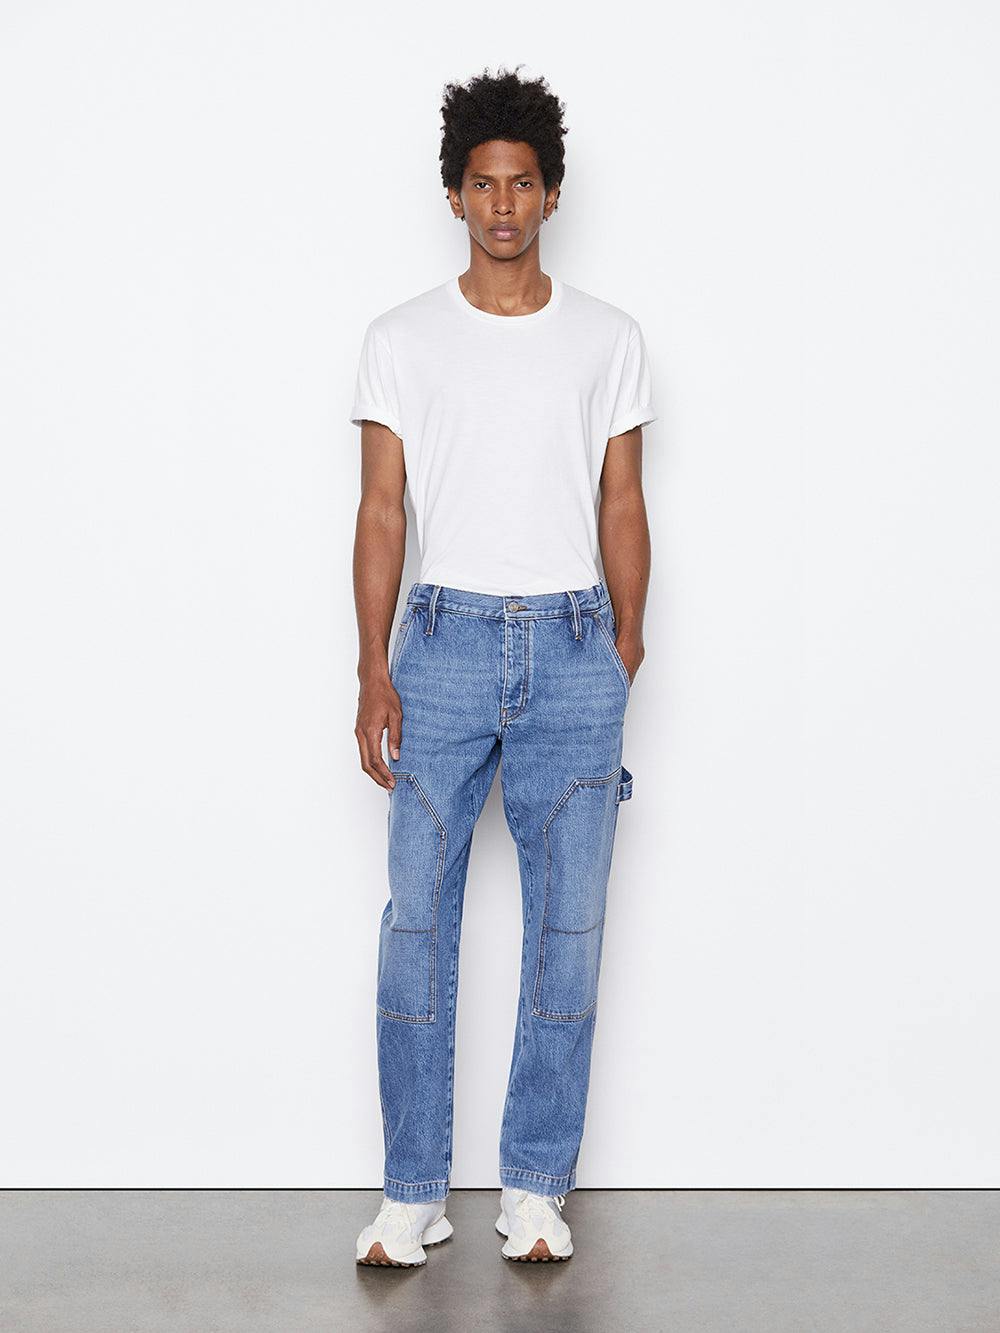 jeans full body view alt:hover